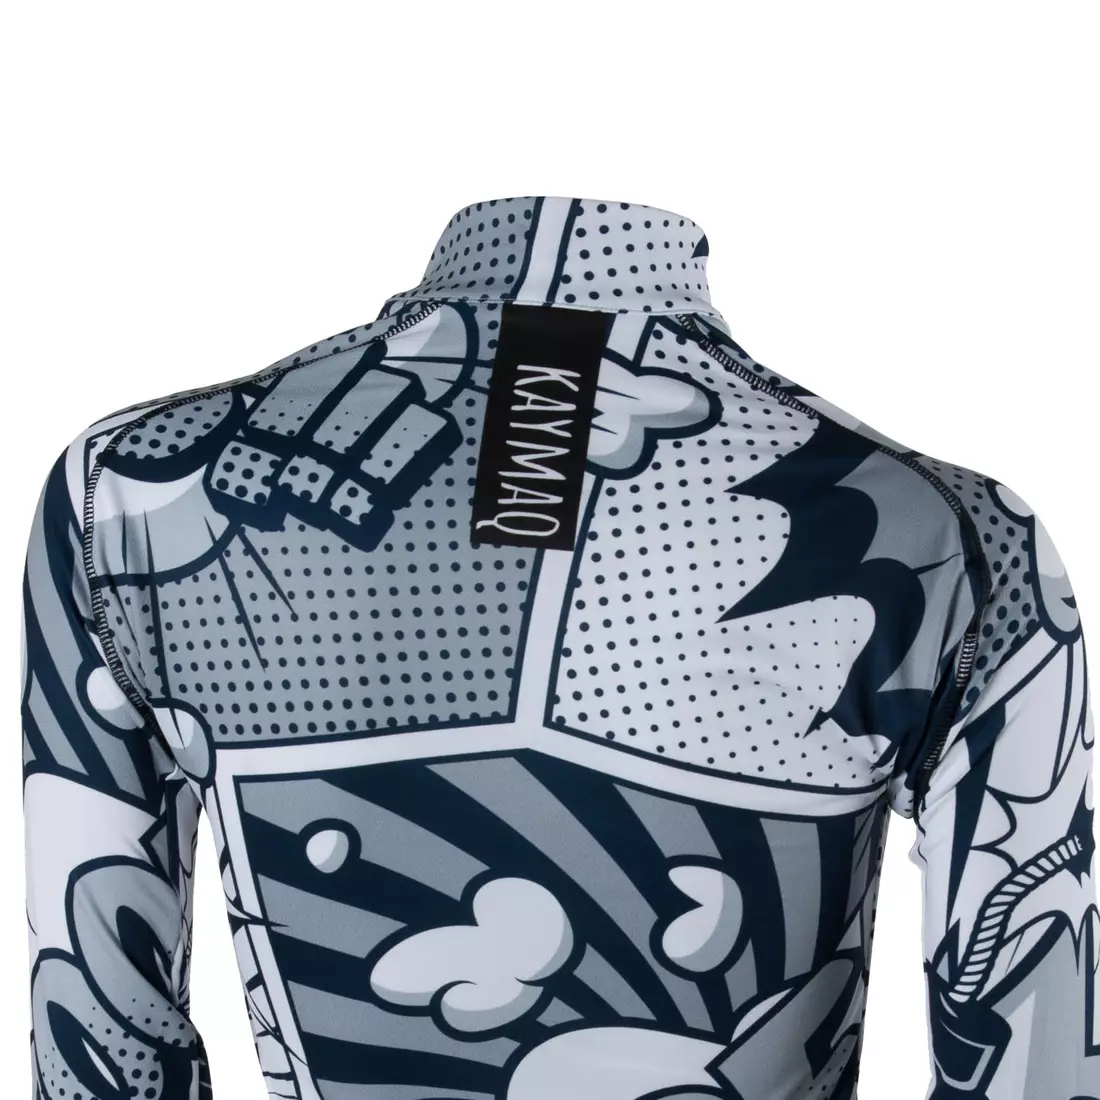 KAYMAQ DESIGN W24 damska bluza rowerowa